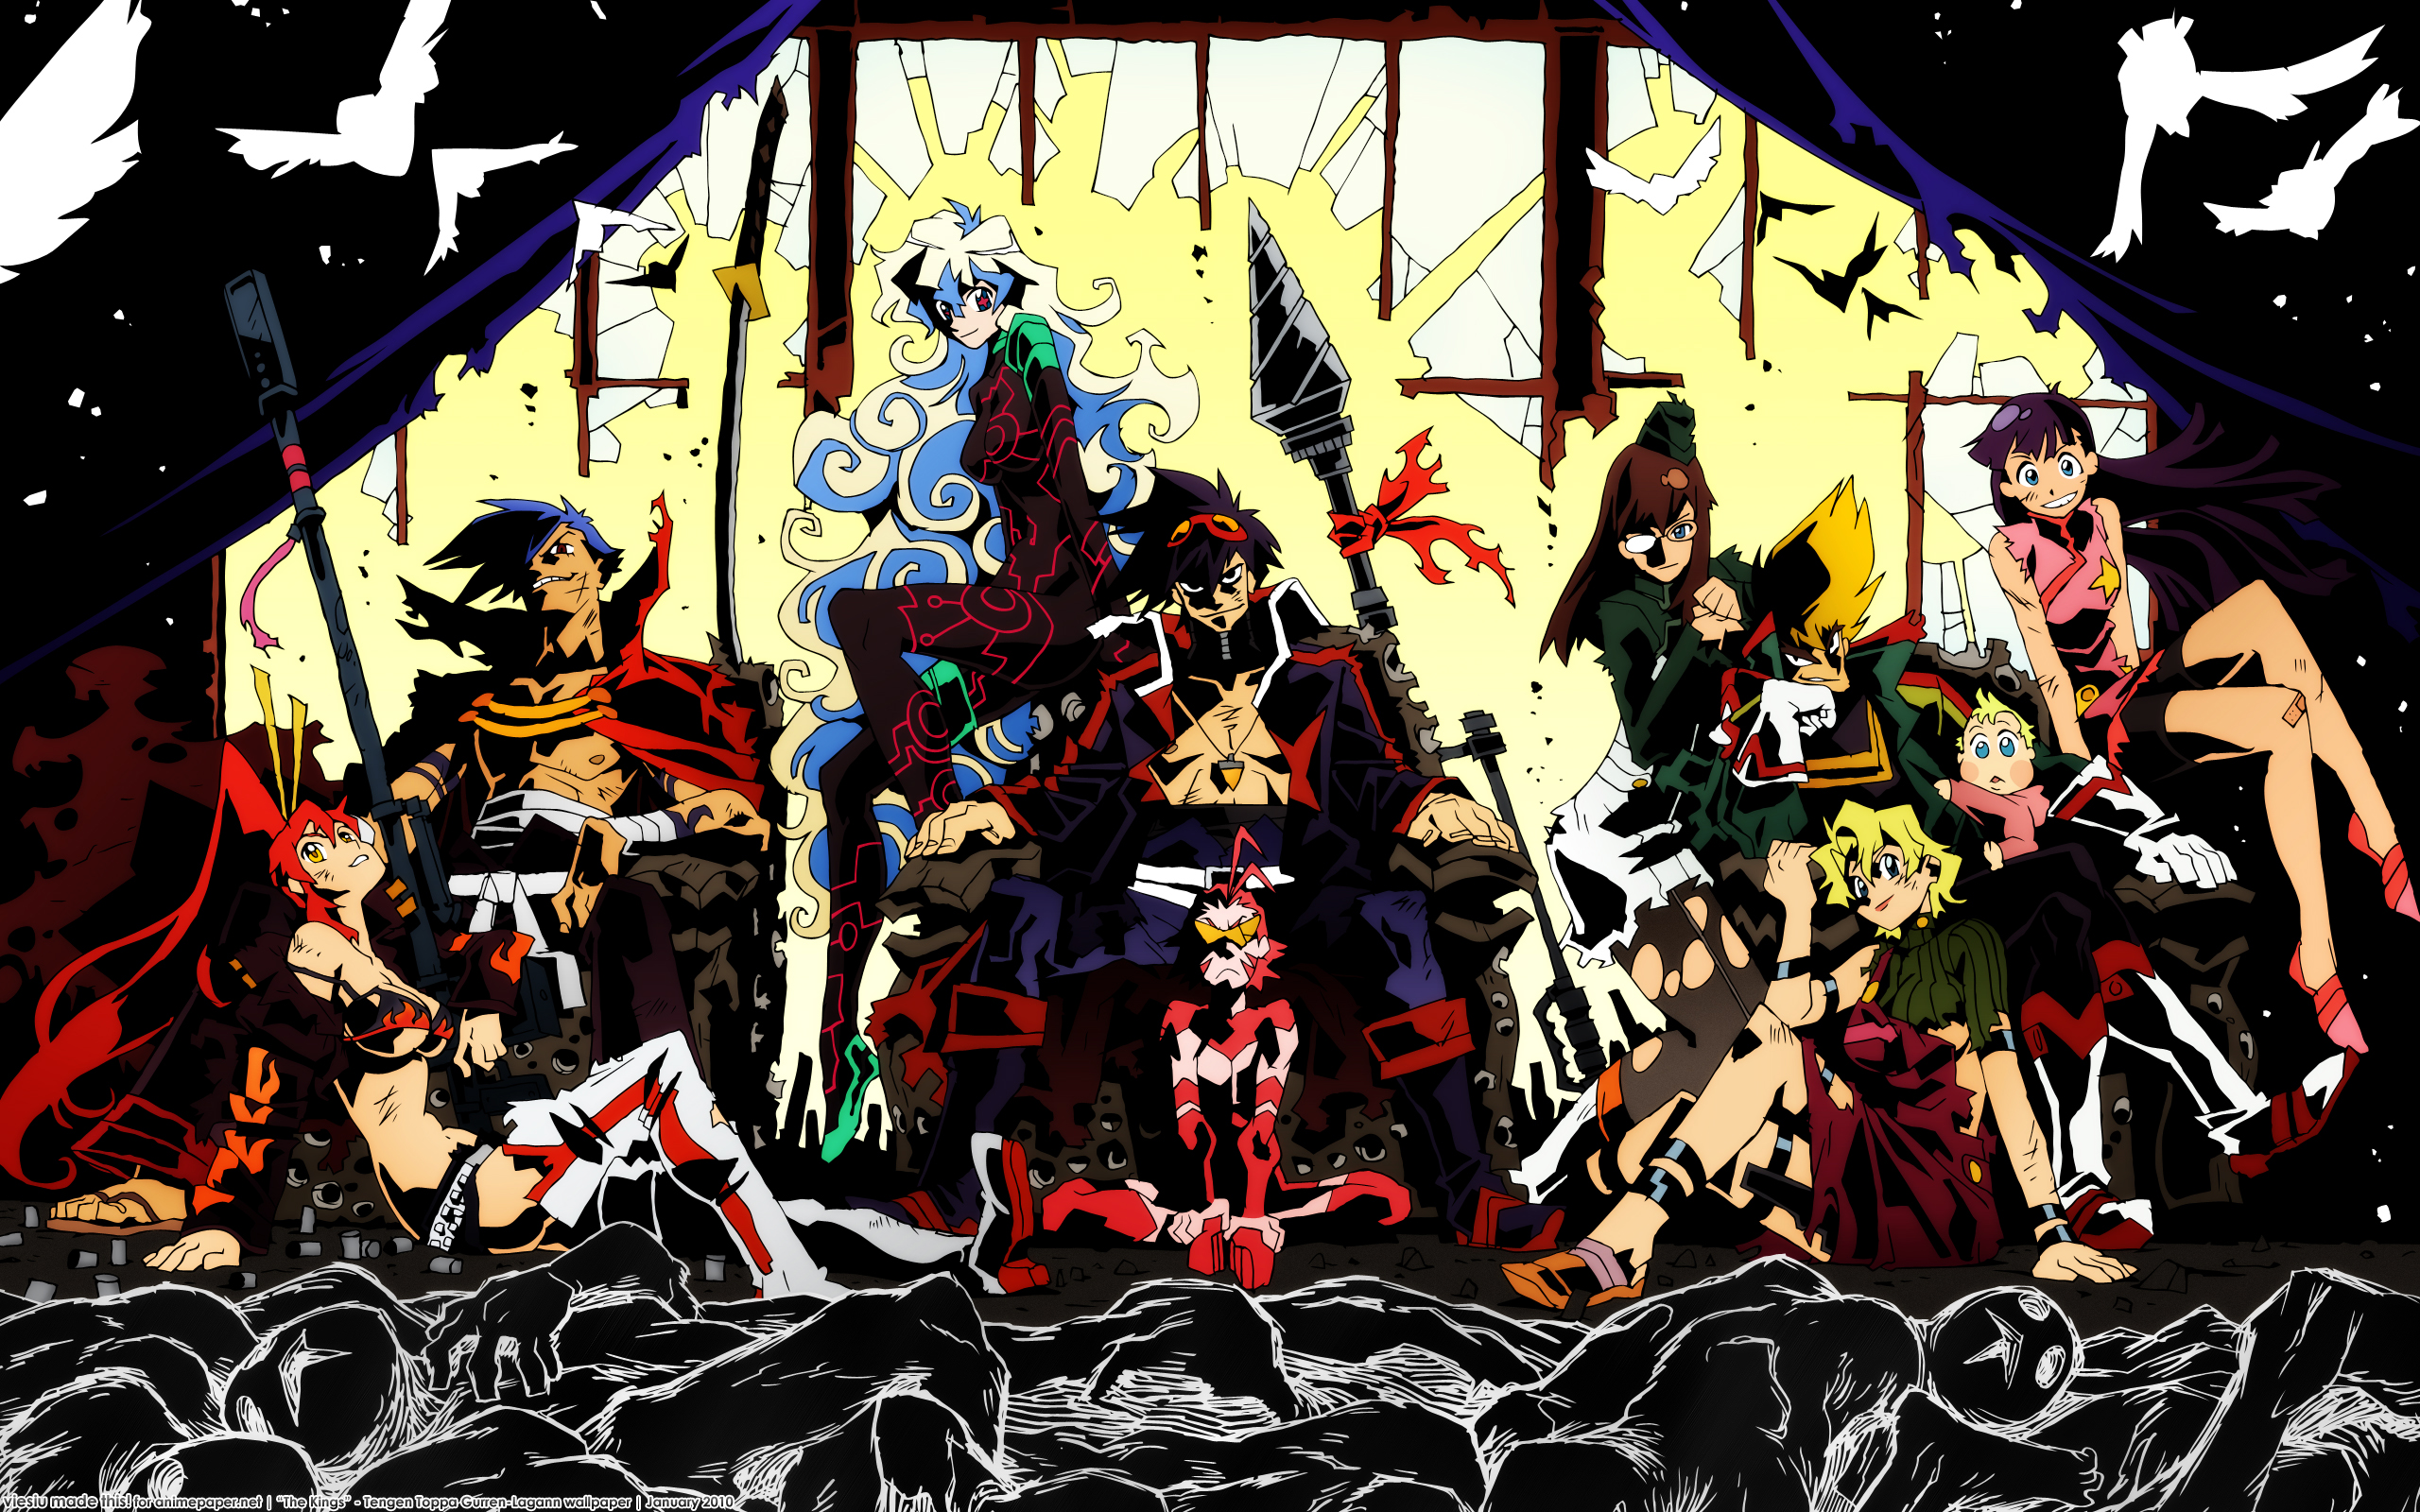 Gurren Lagann desktop wallpaper featuring Anime characters Simon, Kamina, Yoko, Nia, Boota, and Kittan.